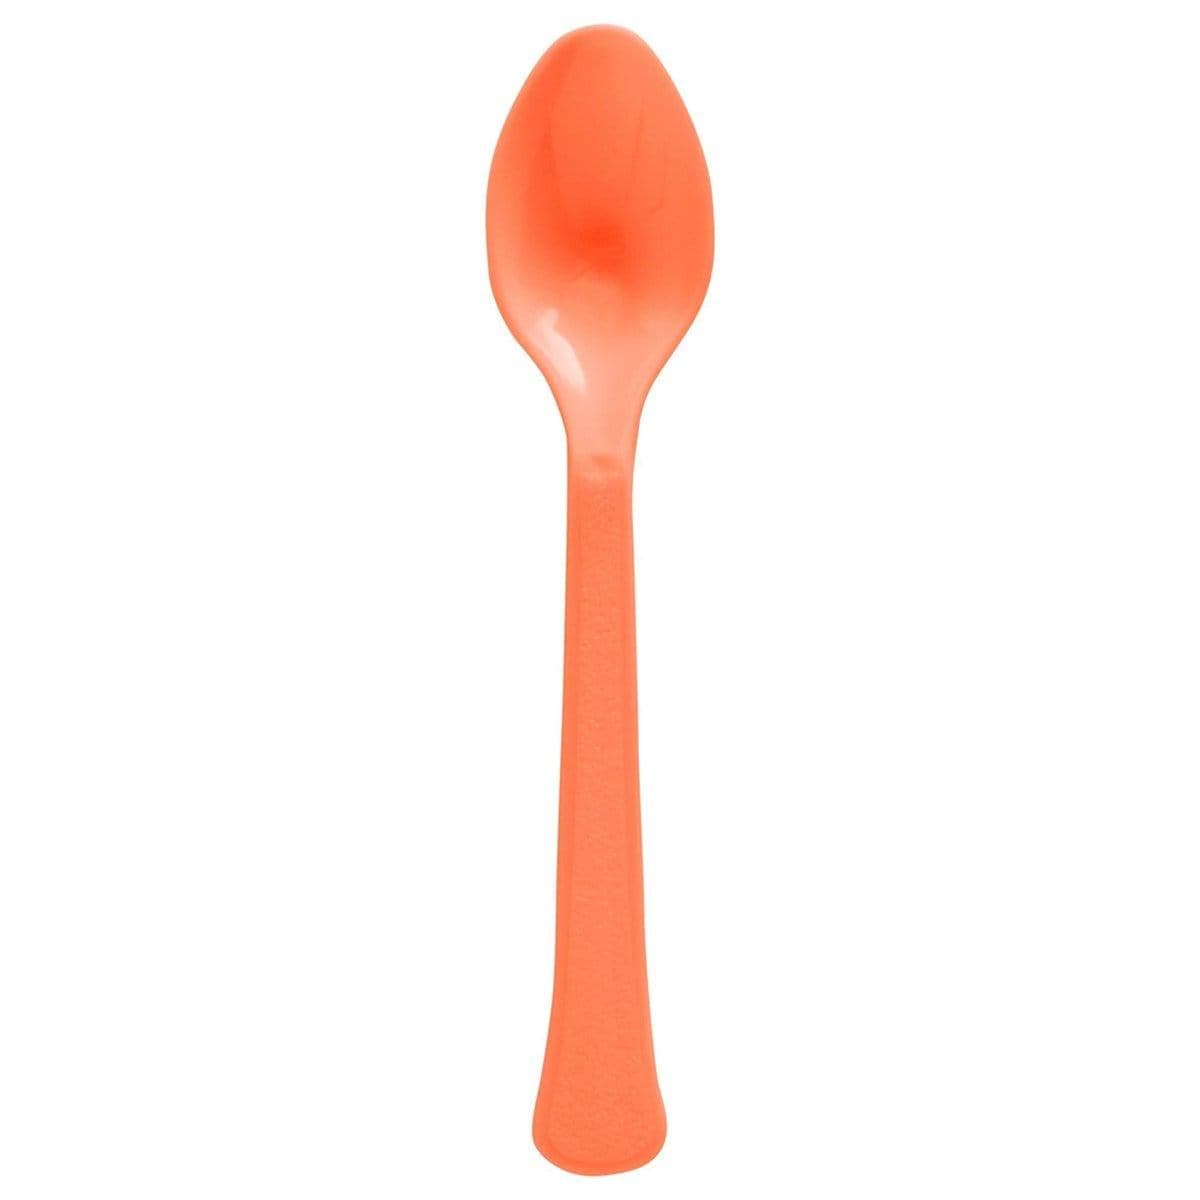 Buy Plasticware Orange Peel Plastic Spoons, 20 Count sold at Party Expert